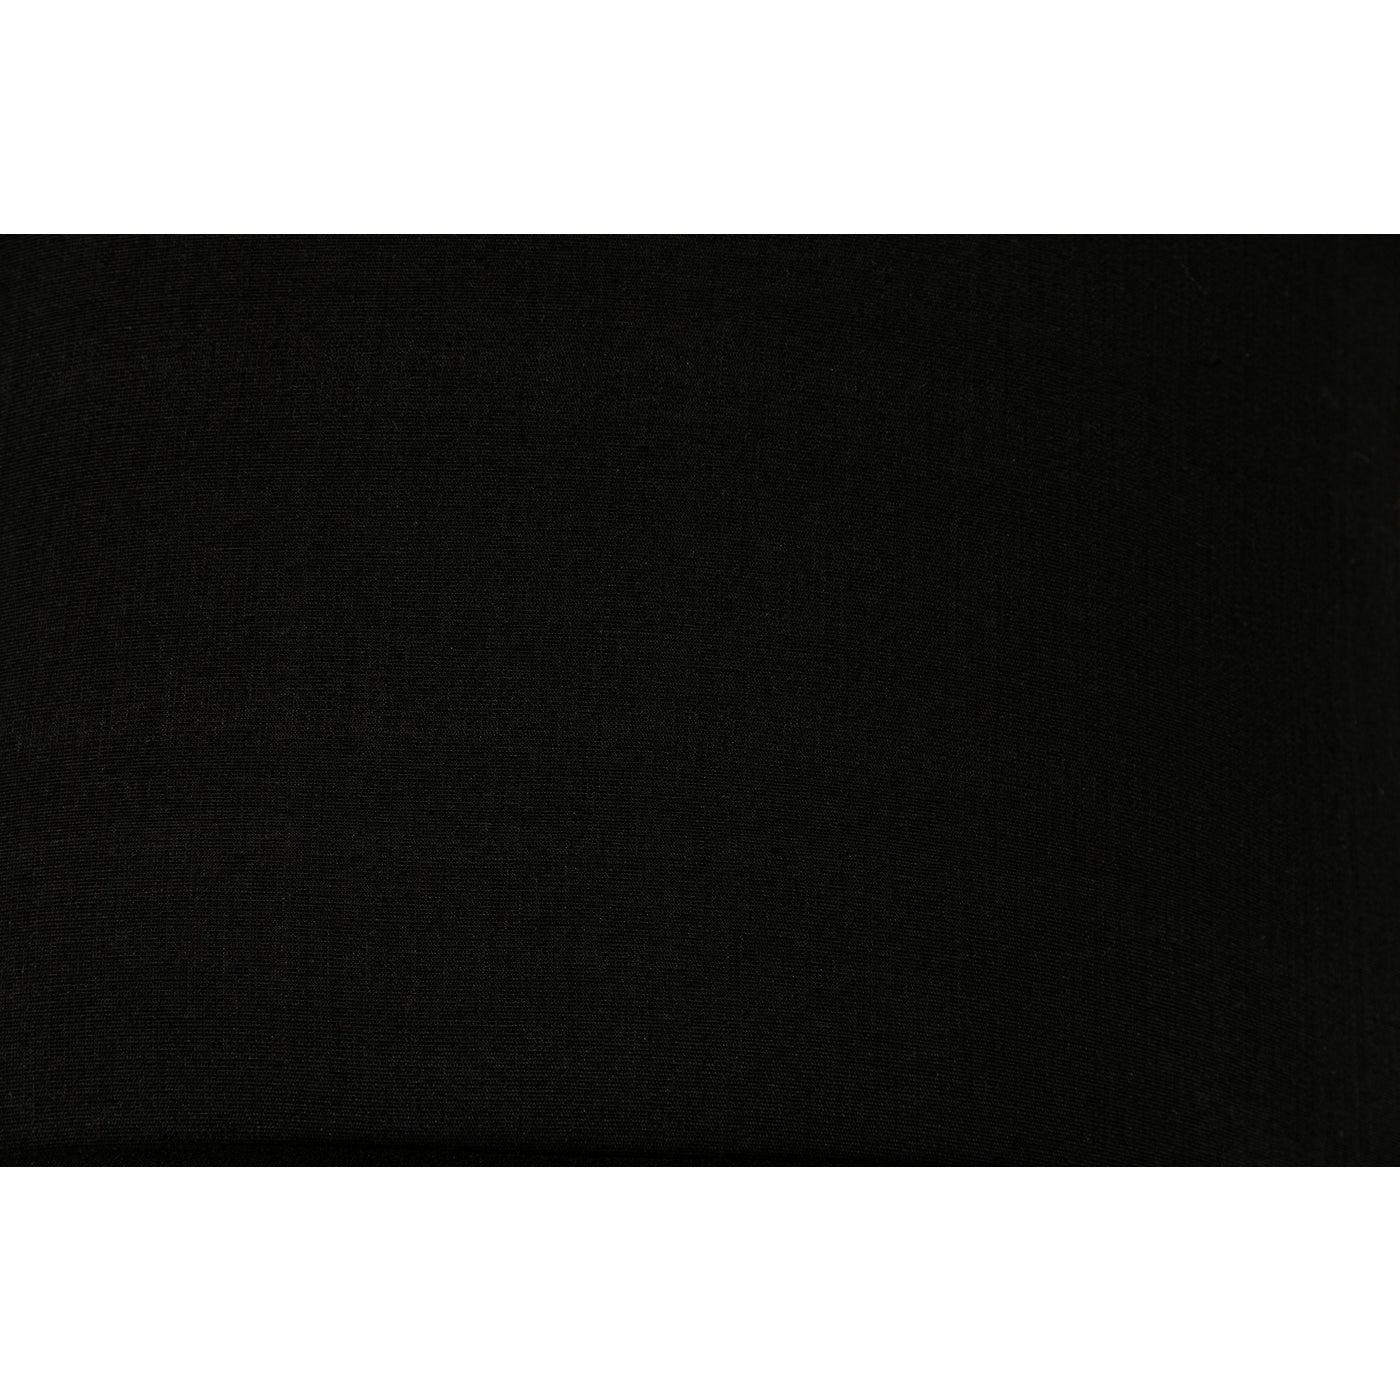 Kurosava Lounge, Teak with Black Fabric